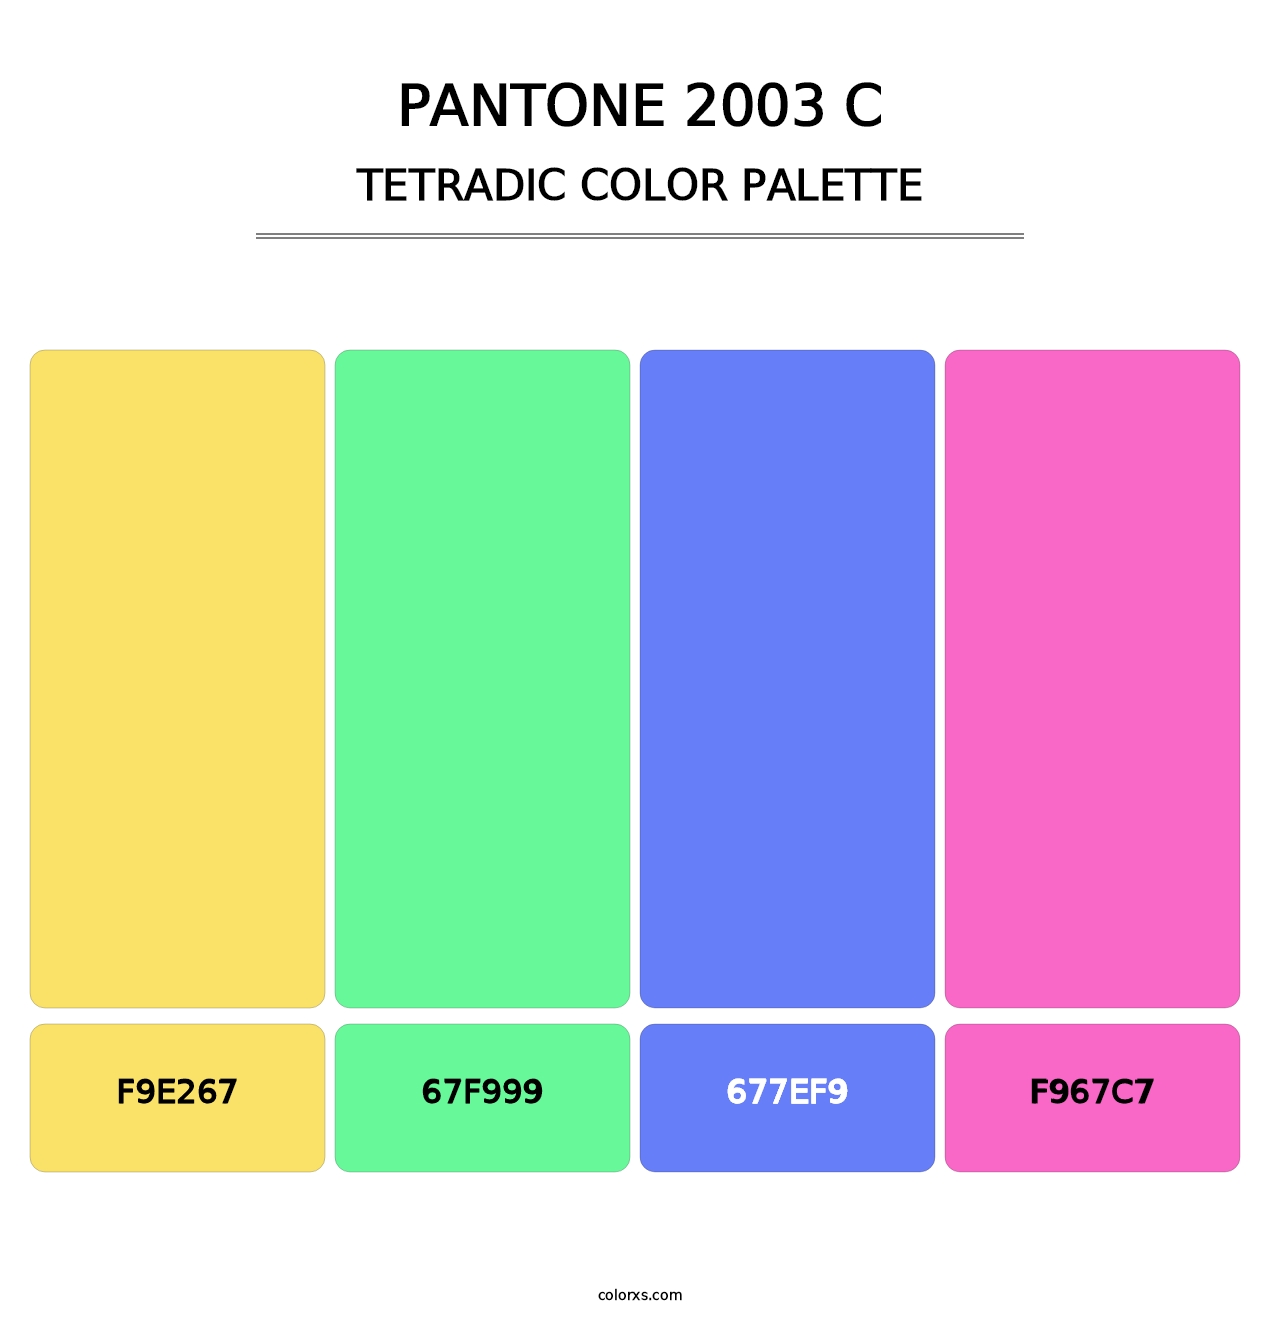 PANTONE 2003 C - Tetradic Color Palette